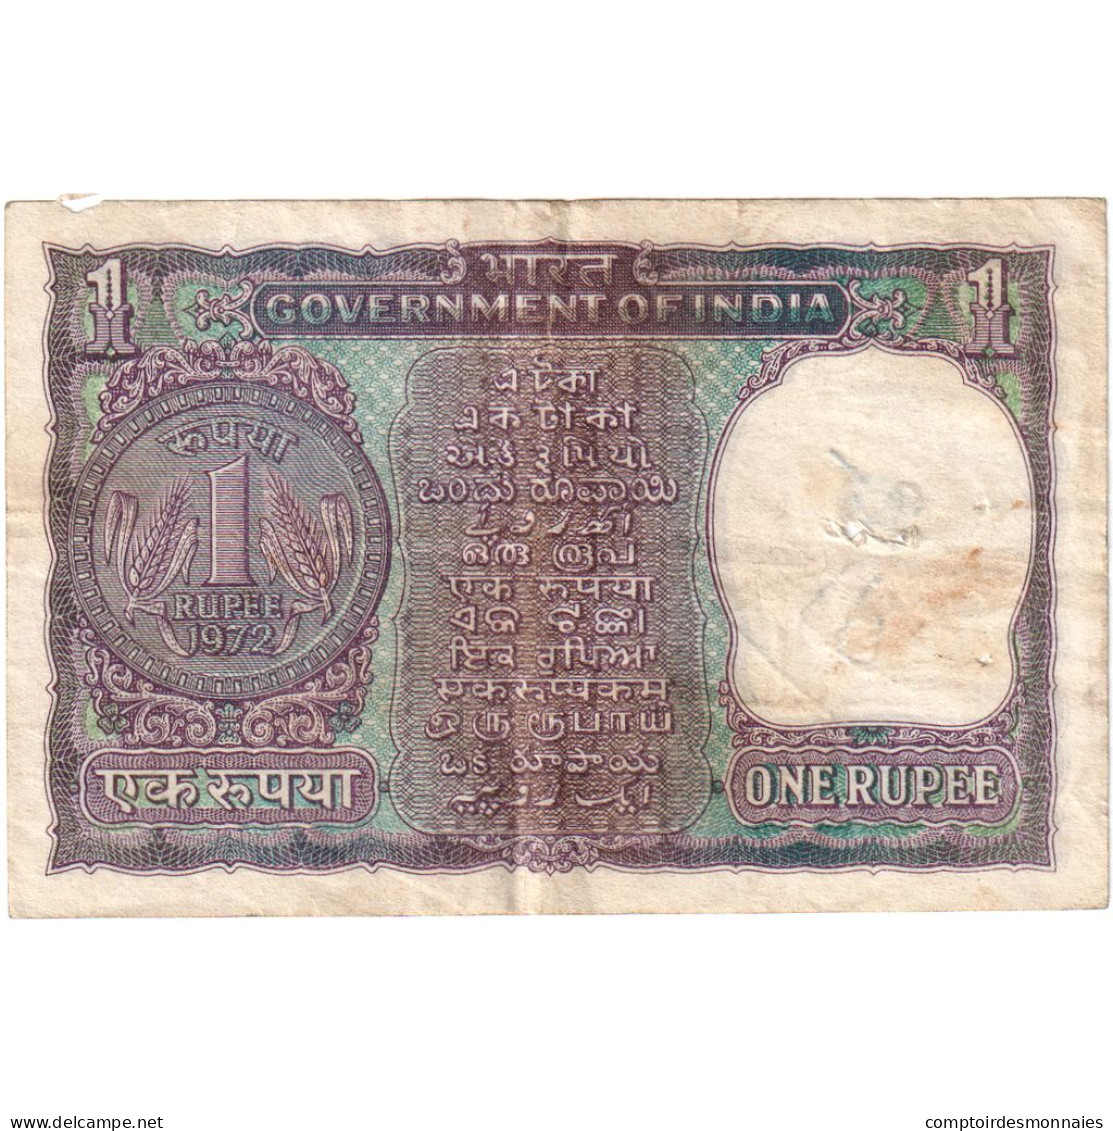 Inde, 1 Rupee, Undated (1970), KM:66, B - Inde